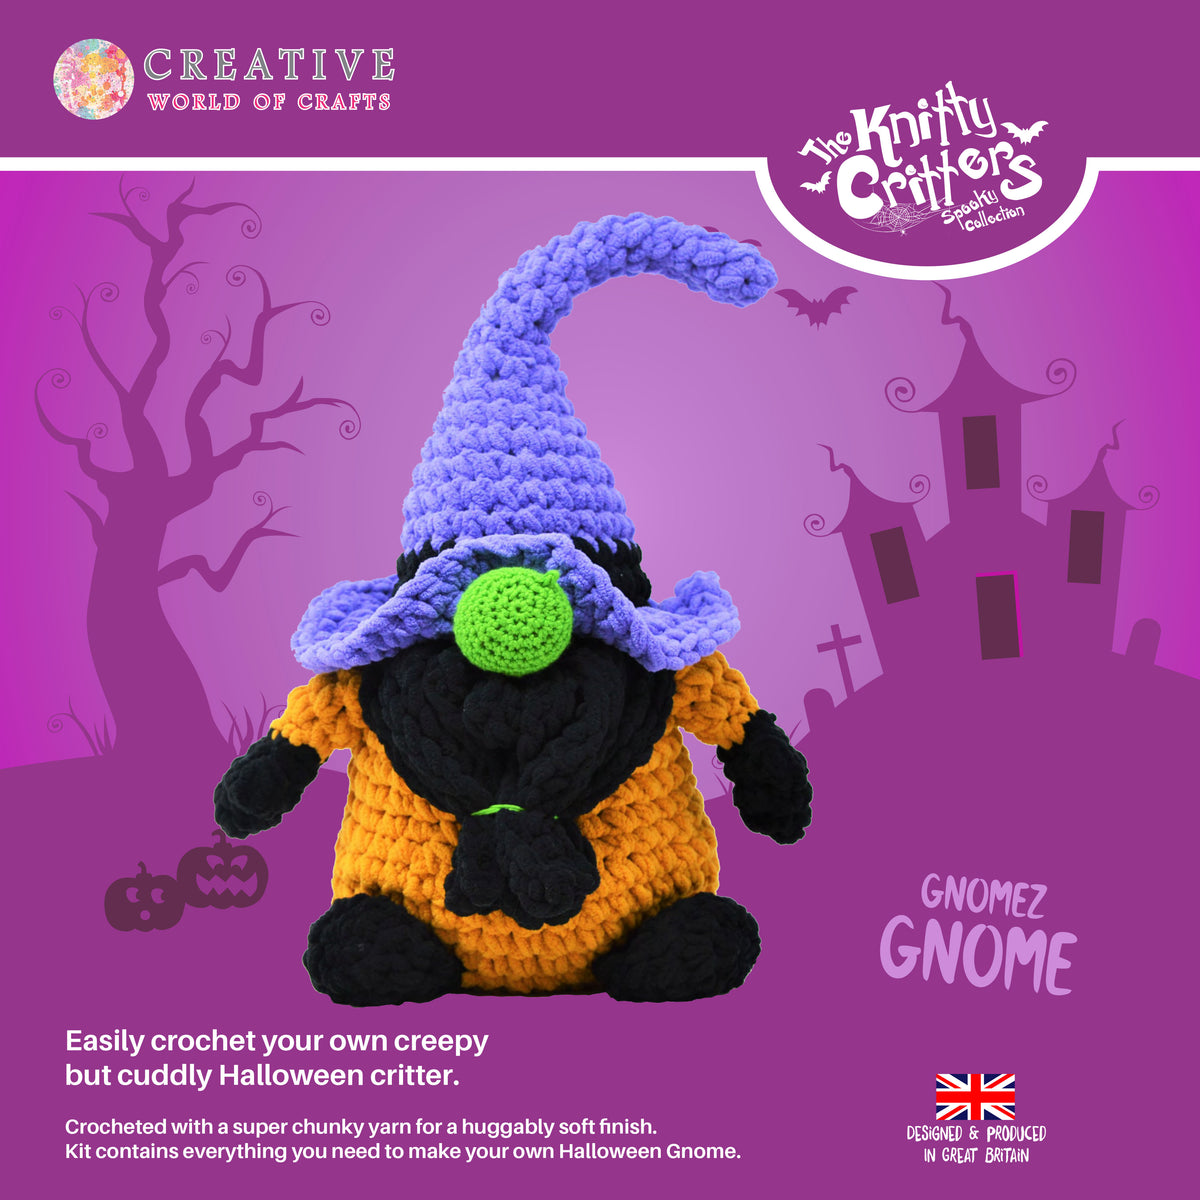 Gnome Knitty Critters Medium Crochet Kit – Allport Editions